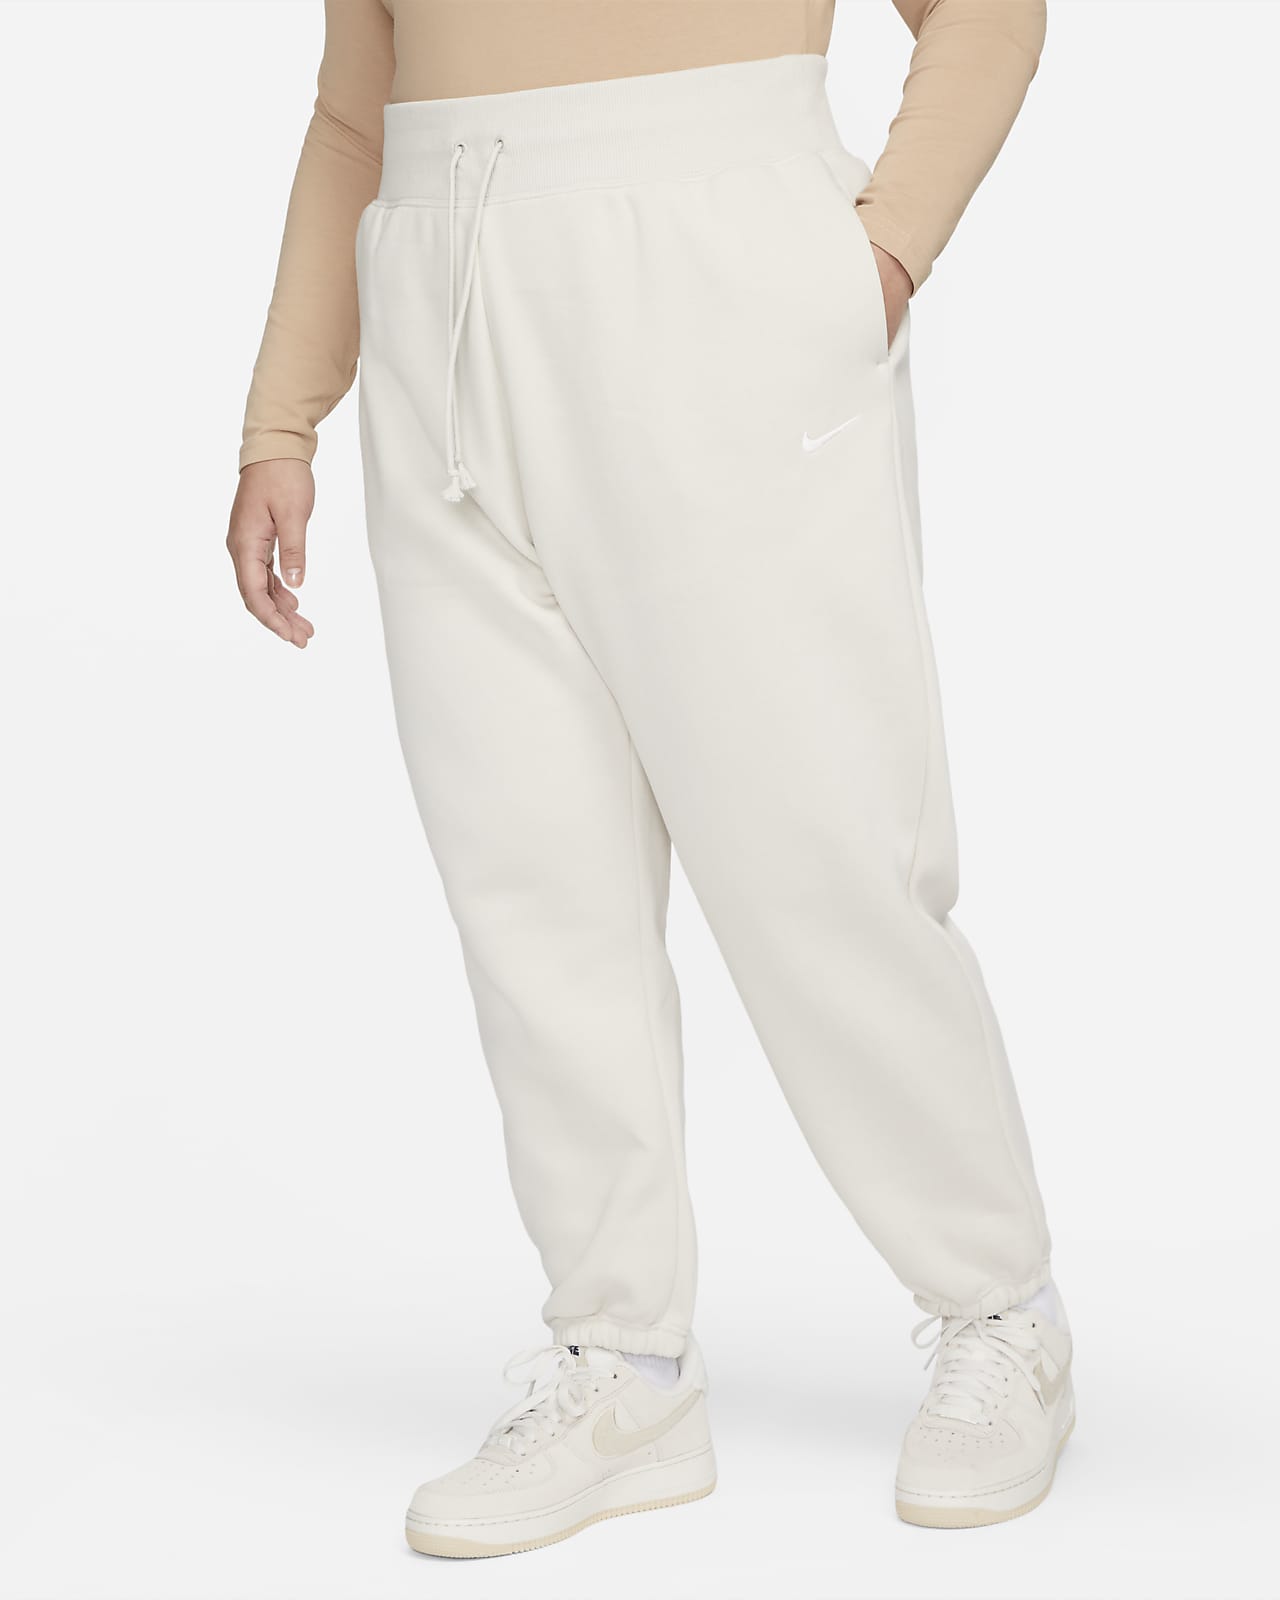 Nike Sportswear Phoenix Fleece Oversized joggingbroek met hoge taille voor dames (Plus Size)